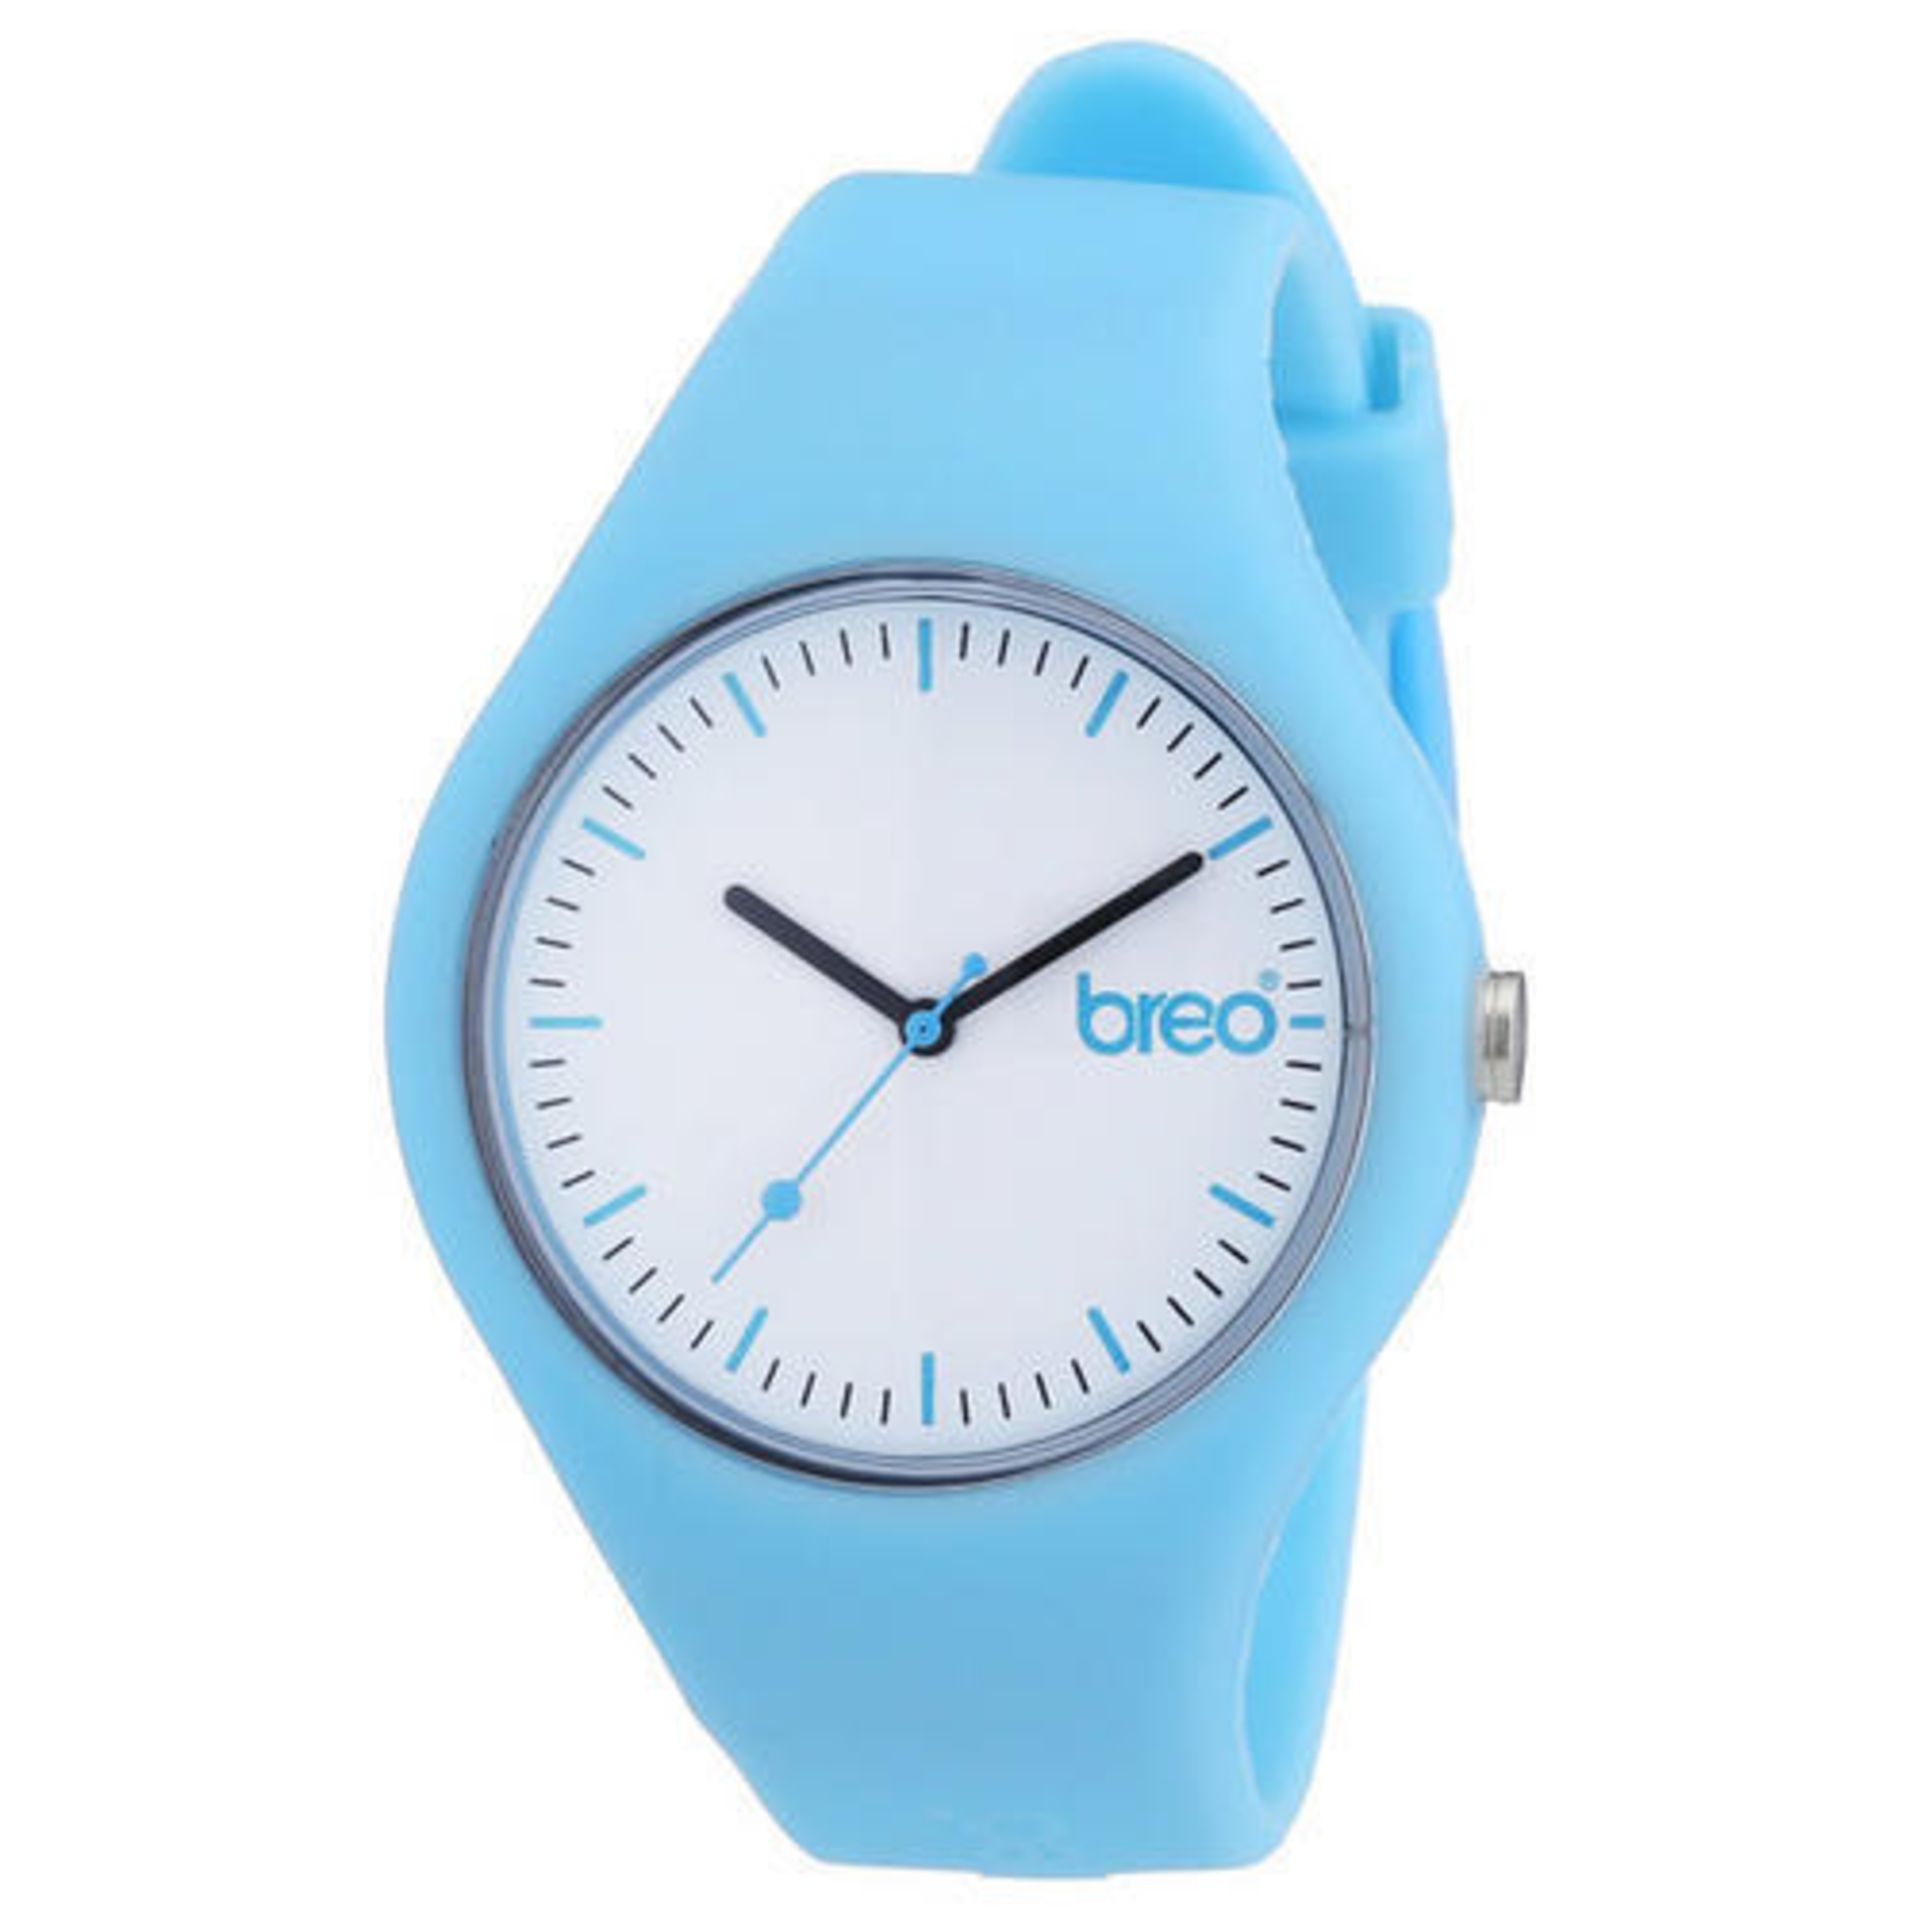 2 x Breo Classic Unisex Quartz Watch with White Dial Analogue Display W/ Blue Strap